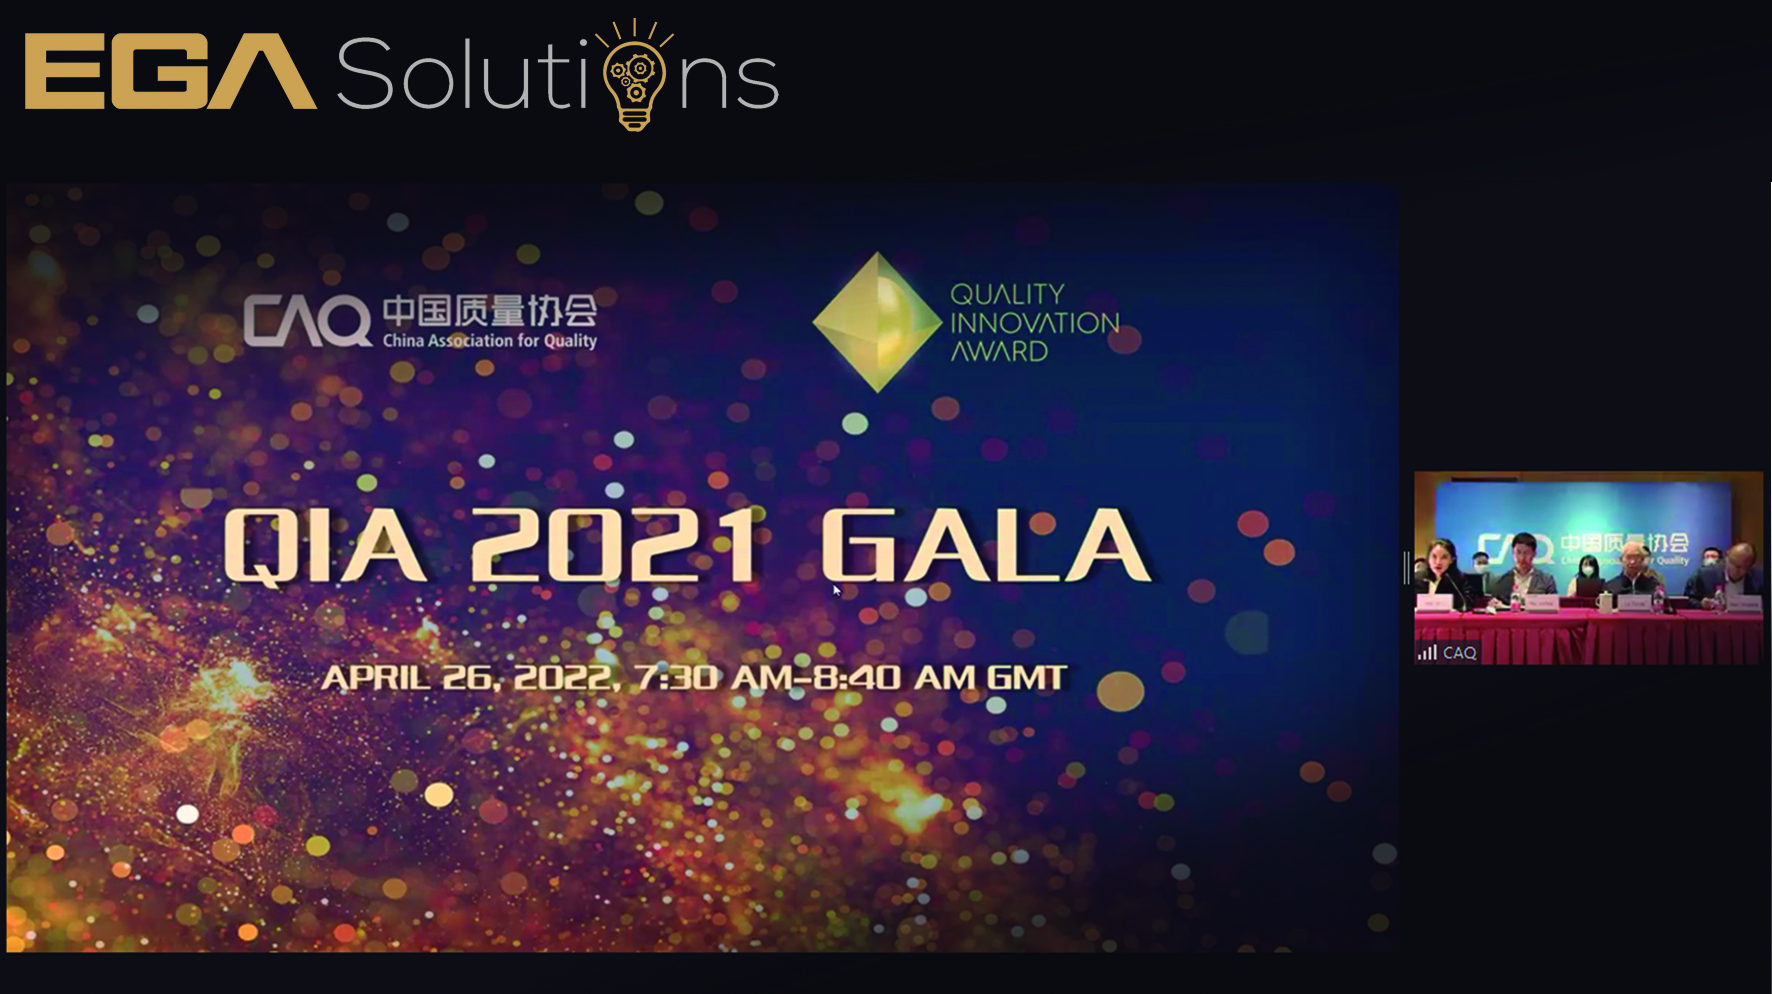 EGA Solutions recibe el premio internacional ‘Quality Innovation Award’